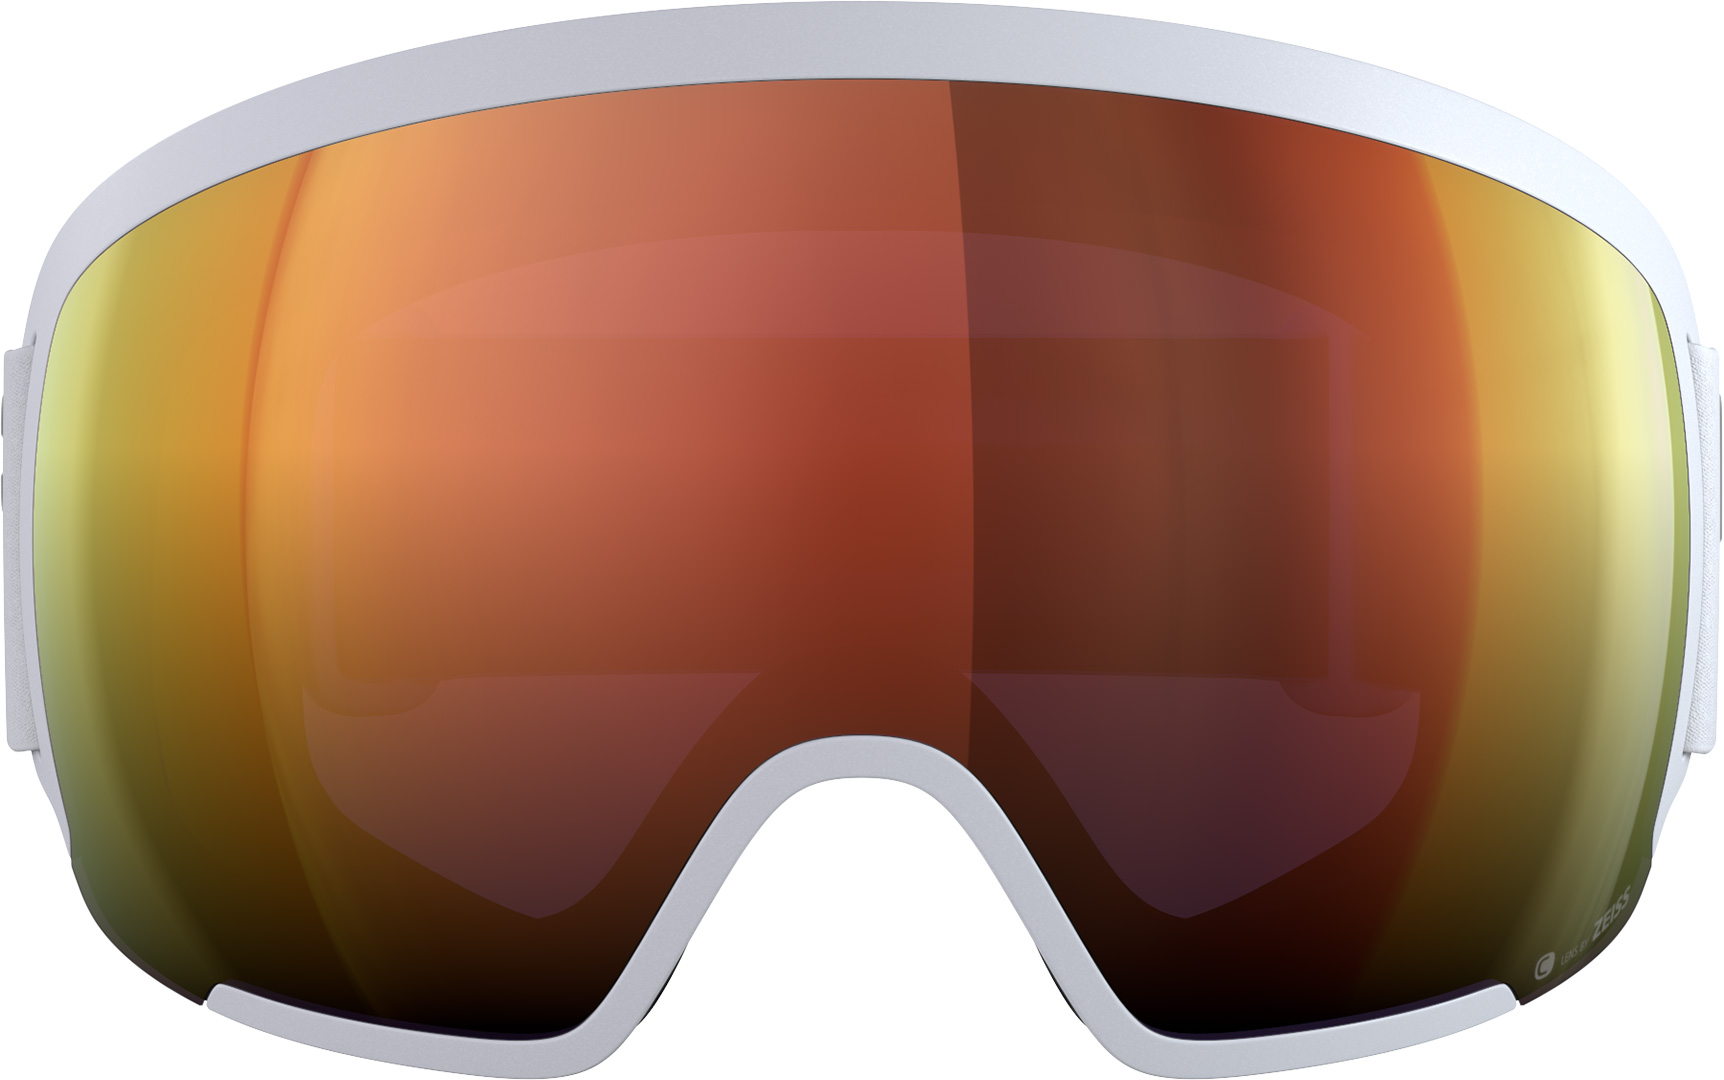 Orb Clarity goggles, Poc